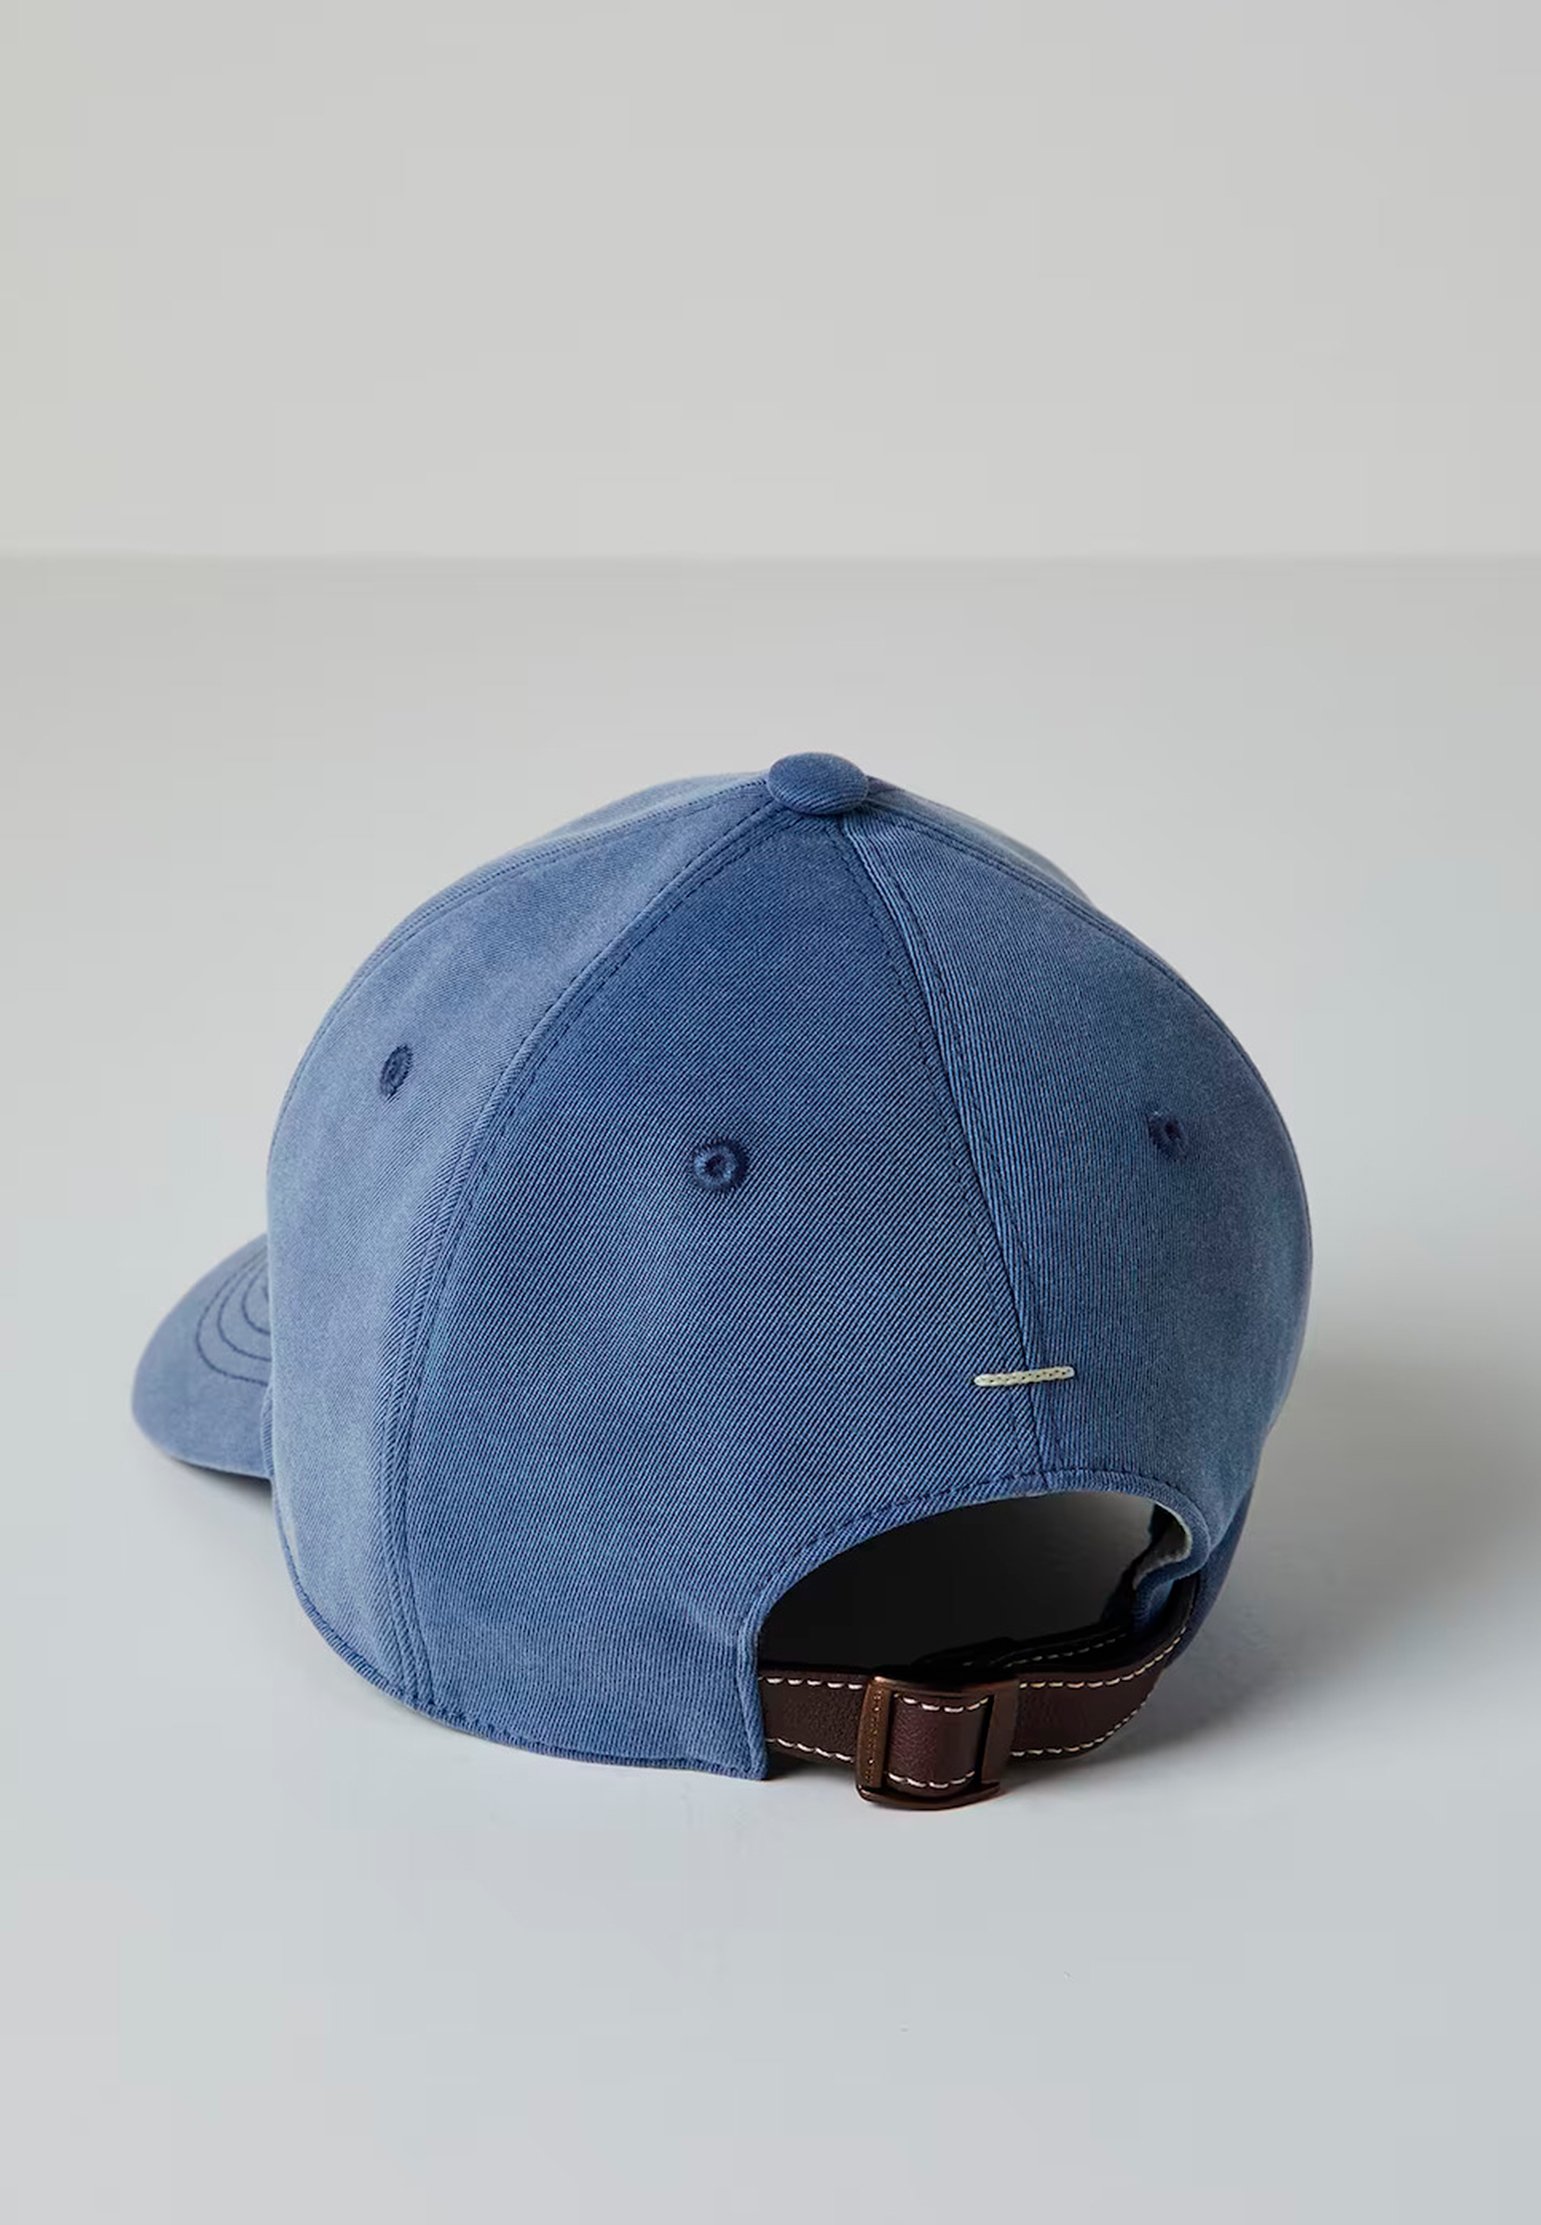 Bonnet BRUNELLO CUCINELLI Color: blue (Code: 1520) in online store Allure